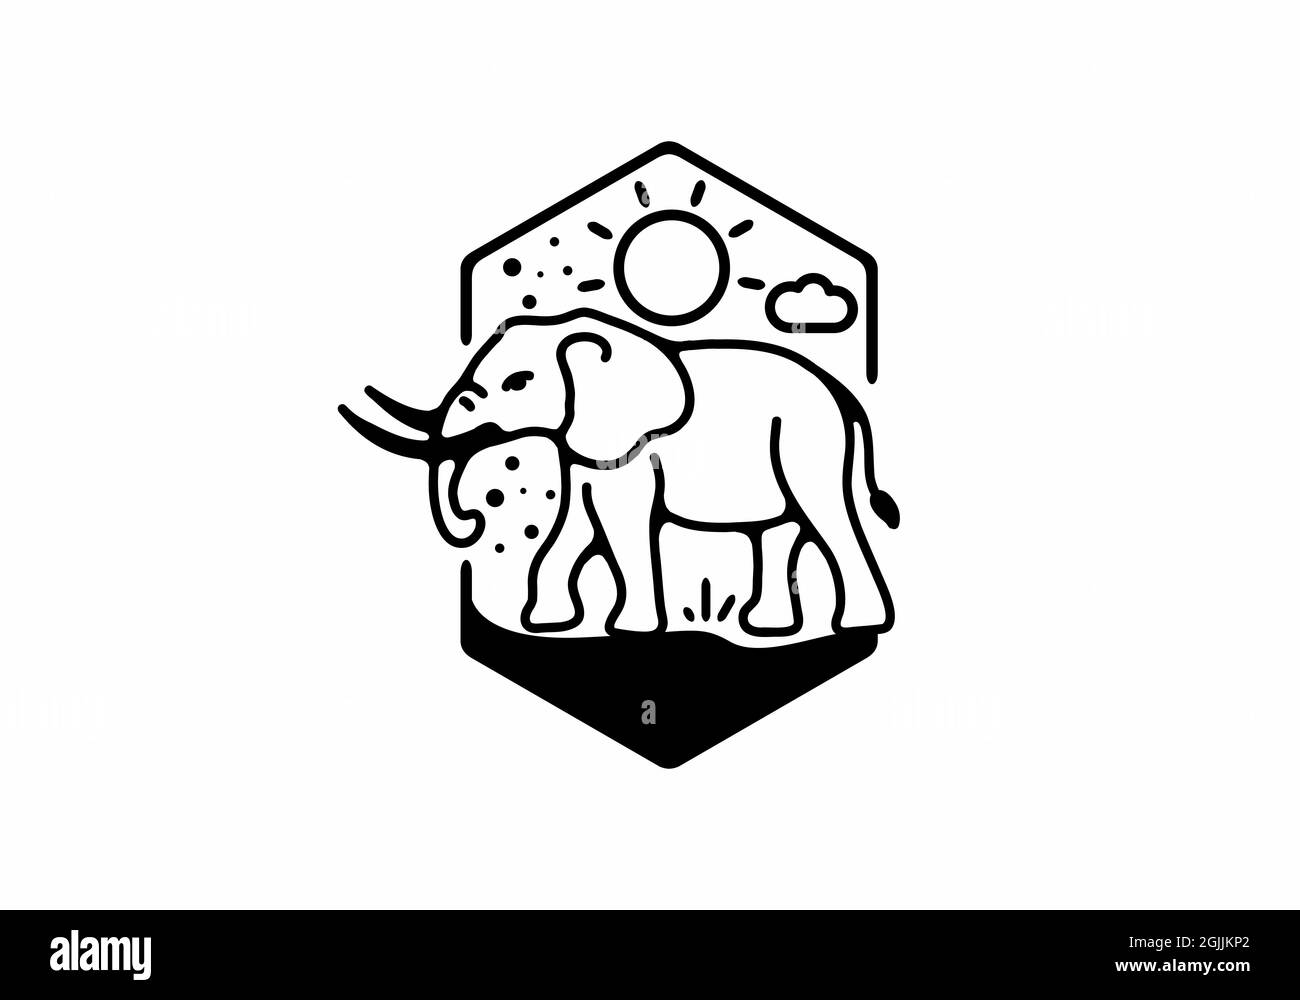 Line art illustration of elephant design Stock Vector